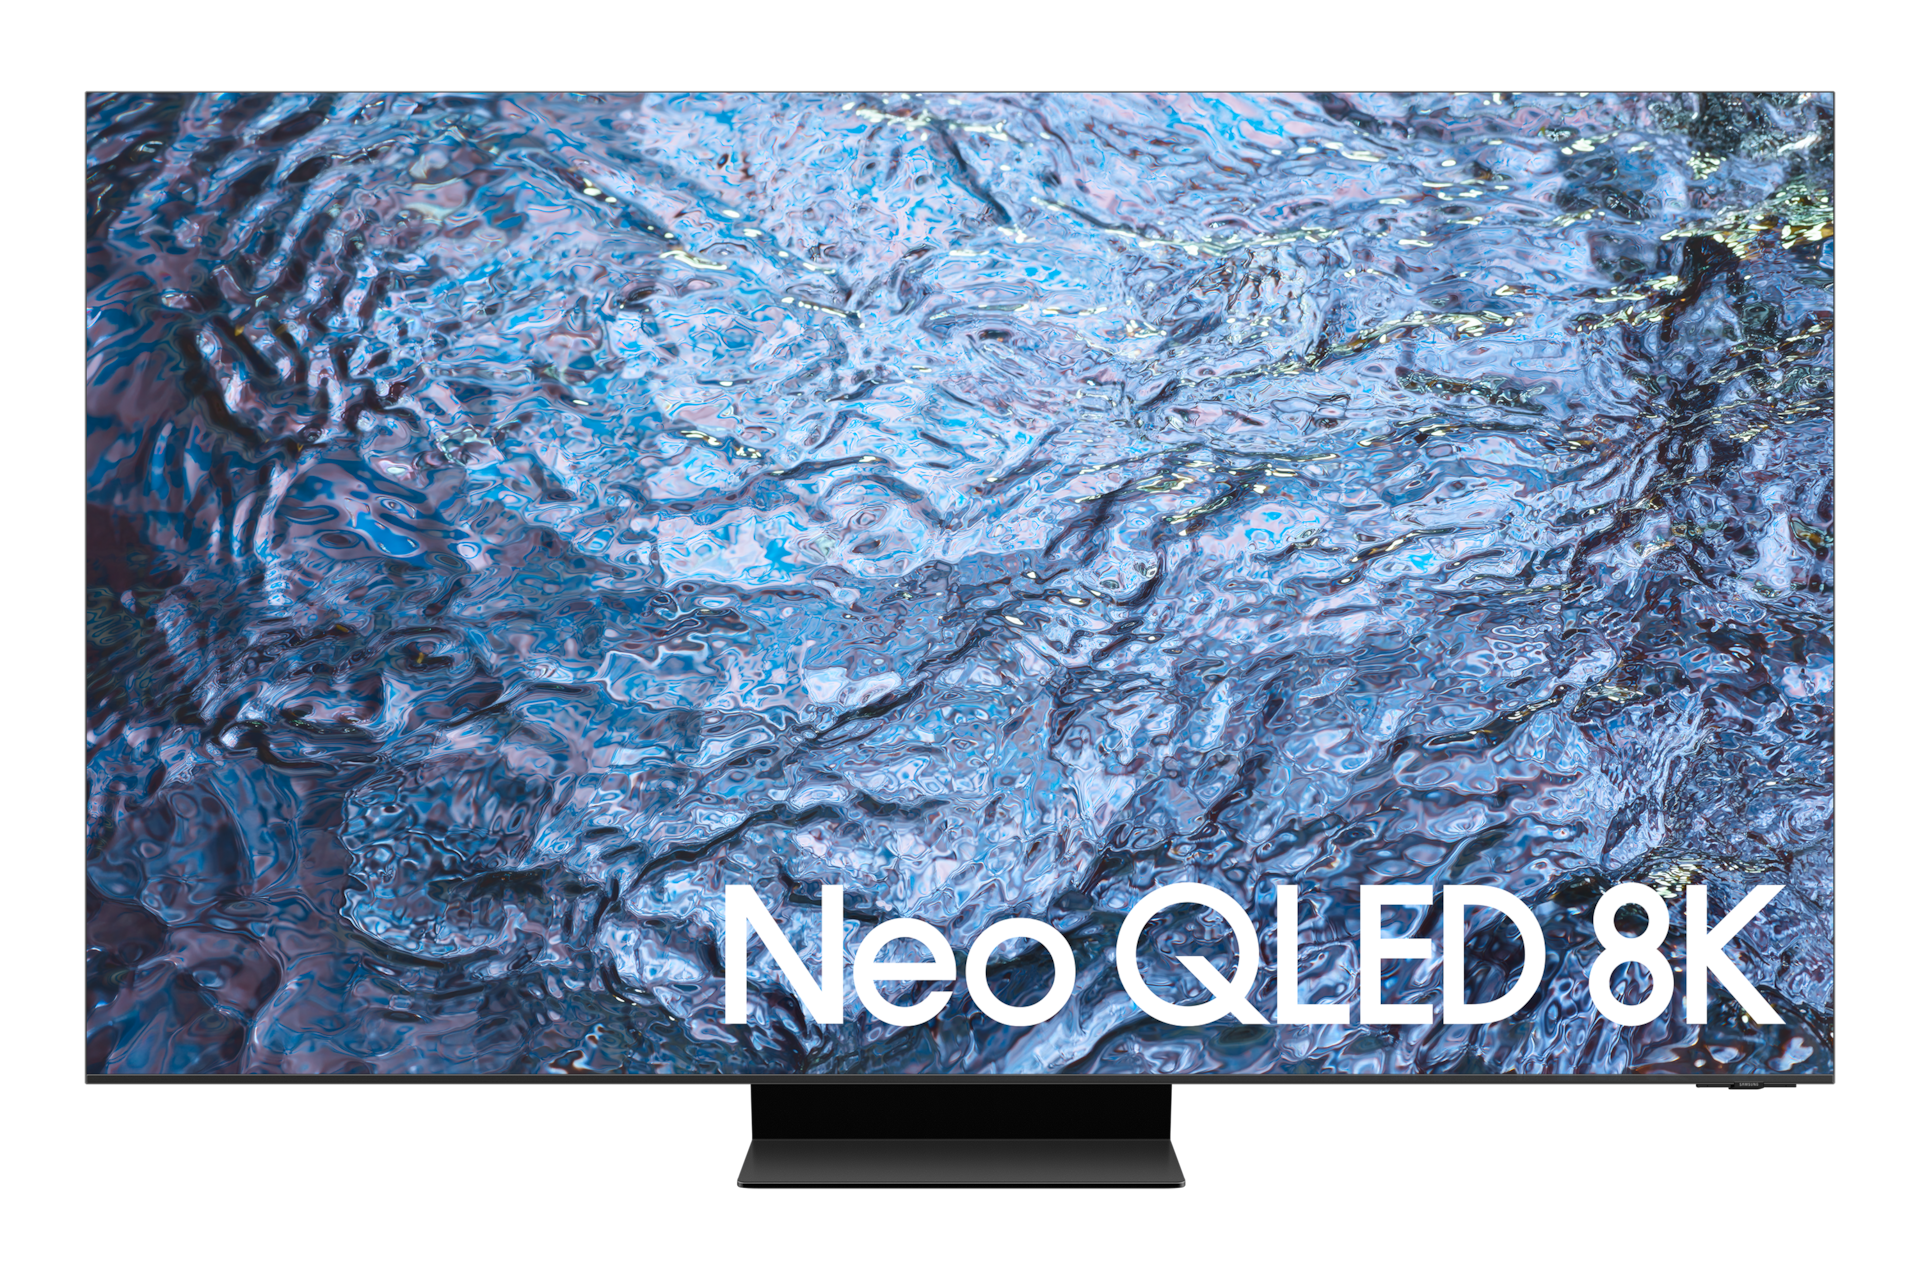 85-Inch Class 8K TV, QN900A Samsung Neo QLED Smart TV